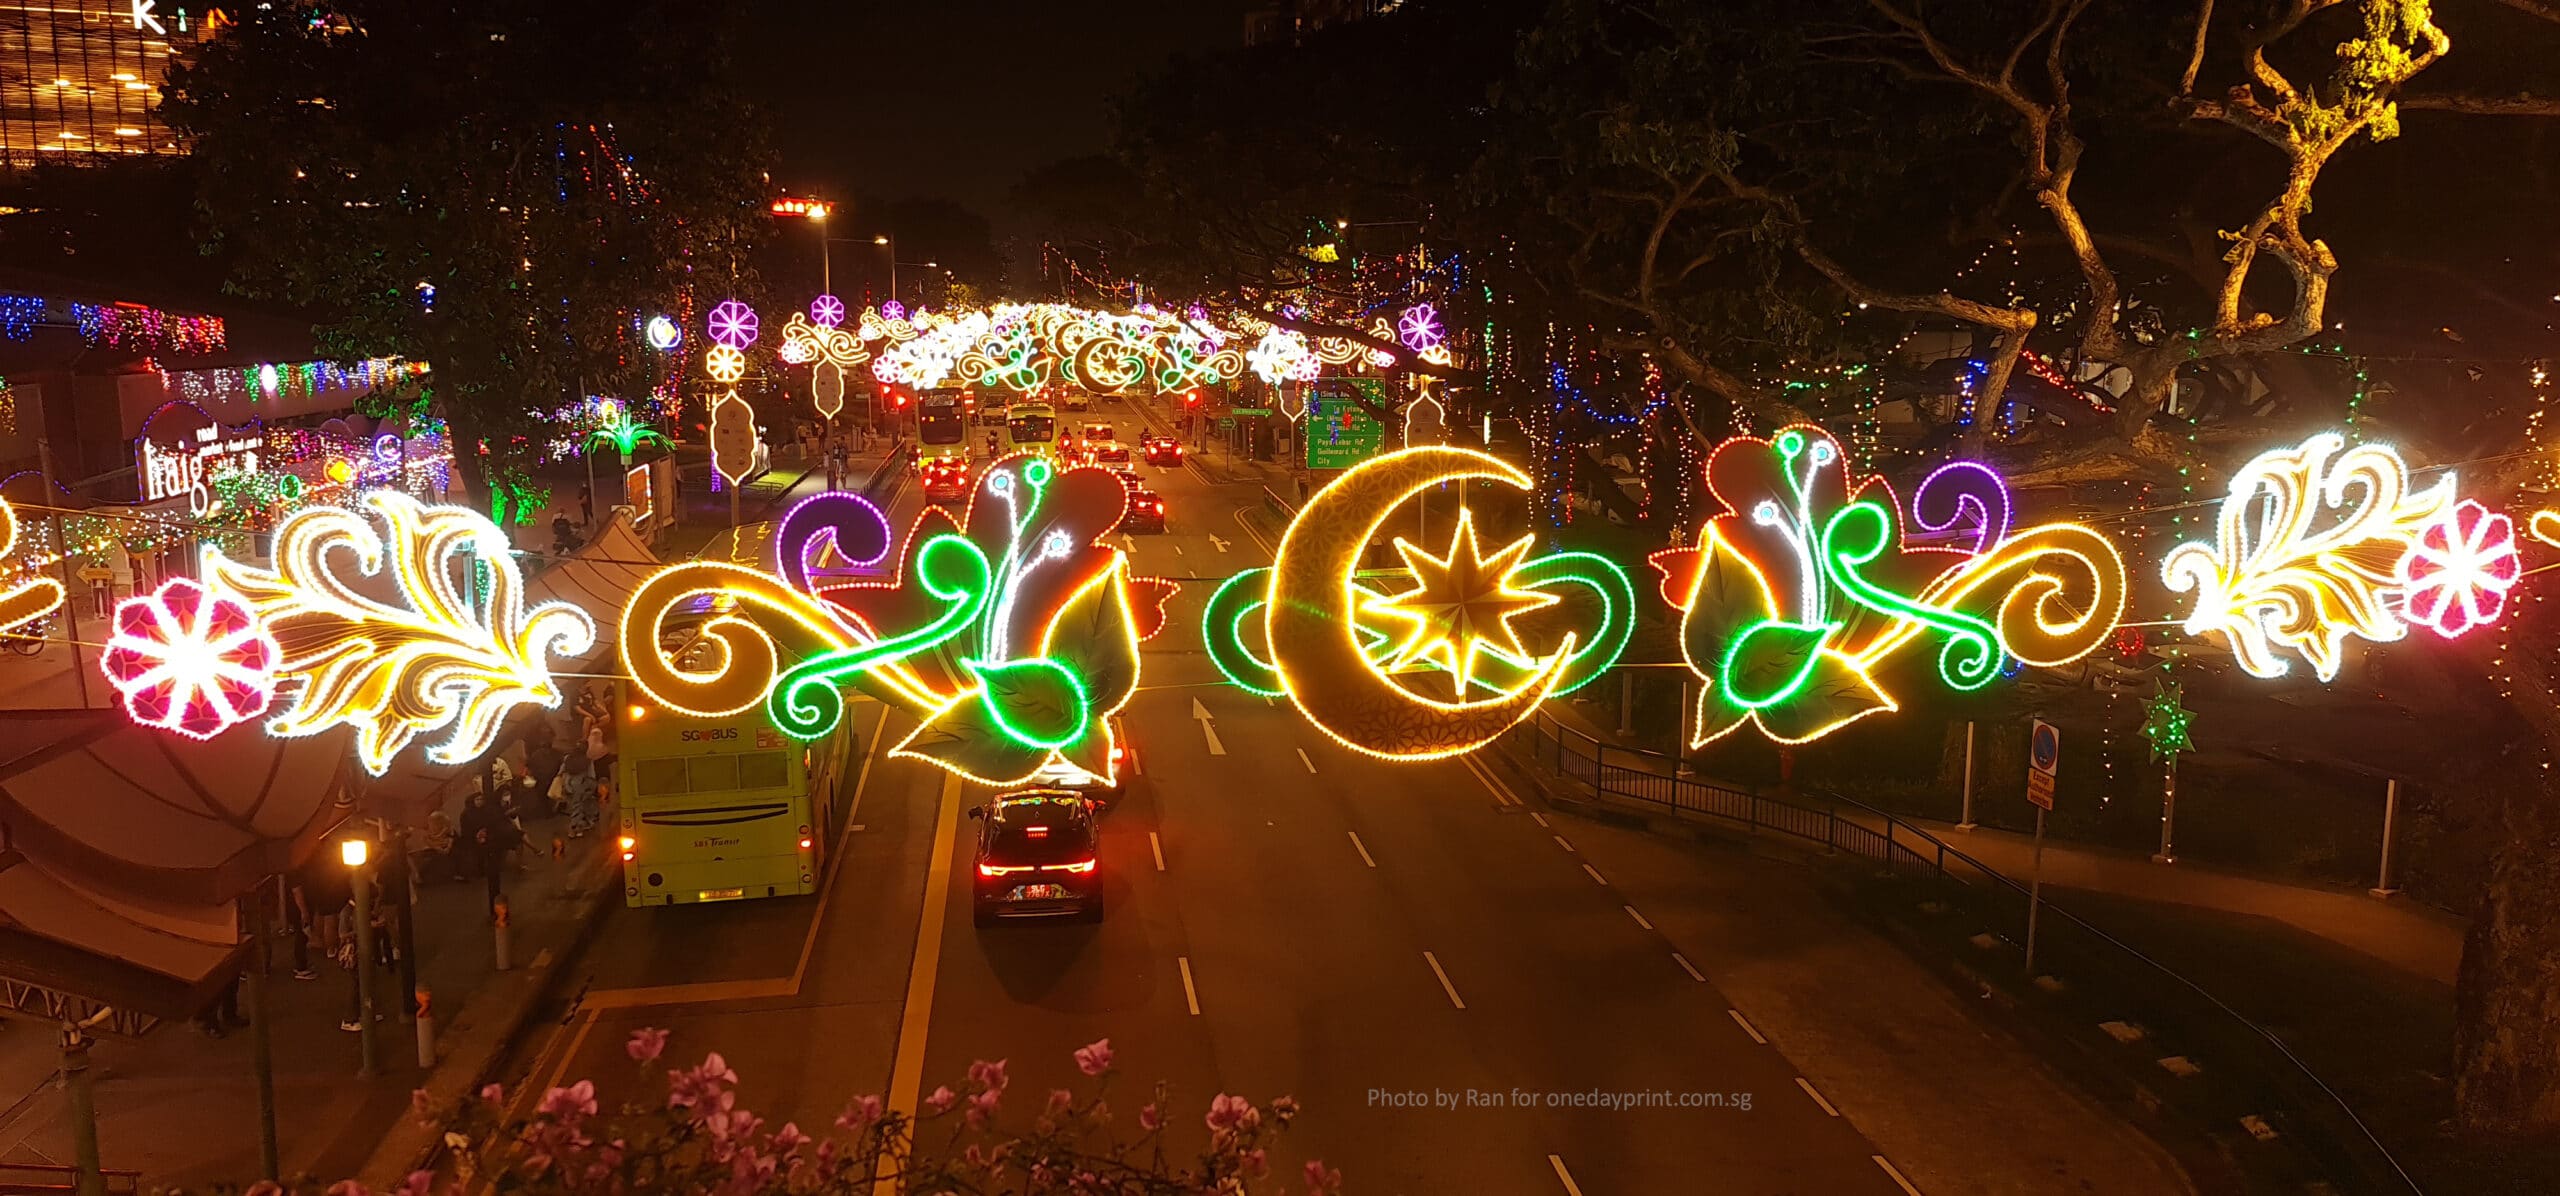 Img - Hari Raya Aidilfitri Street Lighting, Photo by Ran for onedayprint.com.sg